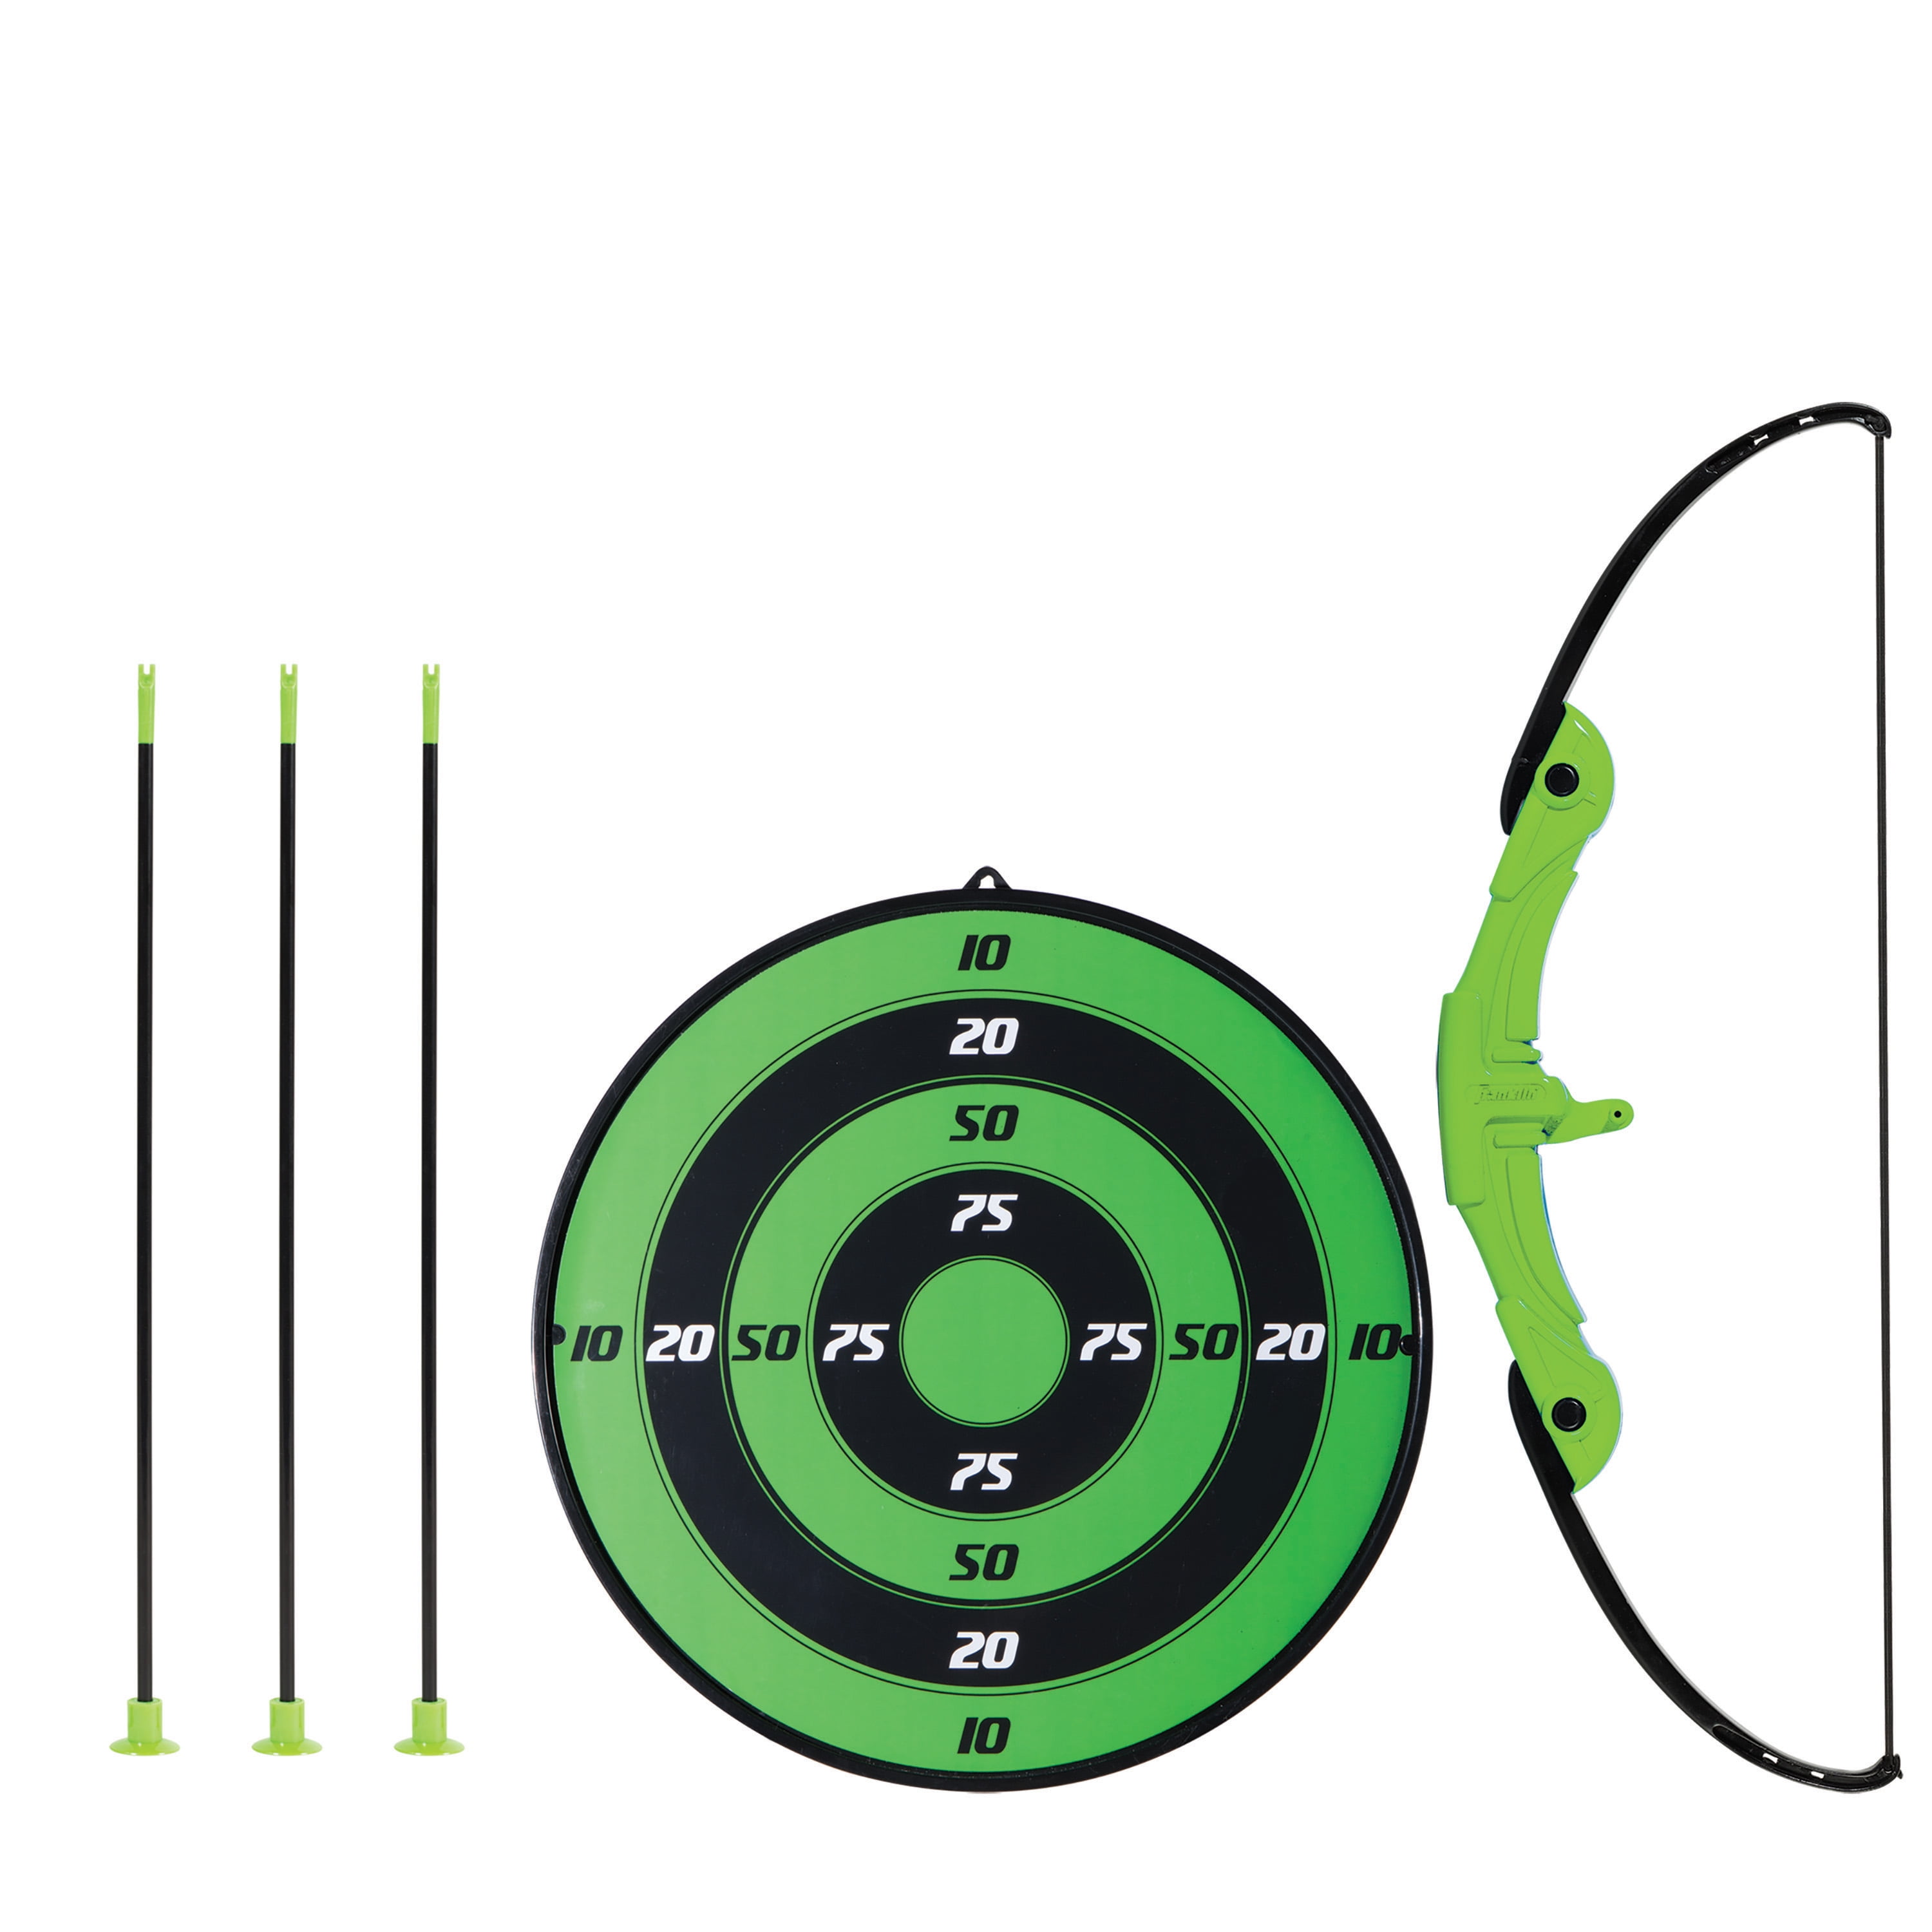 3x Outdoor Sport Archery Foam Arrow Target Bow Shooting Home Decor 24 x 24cm 